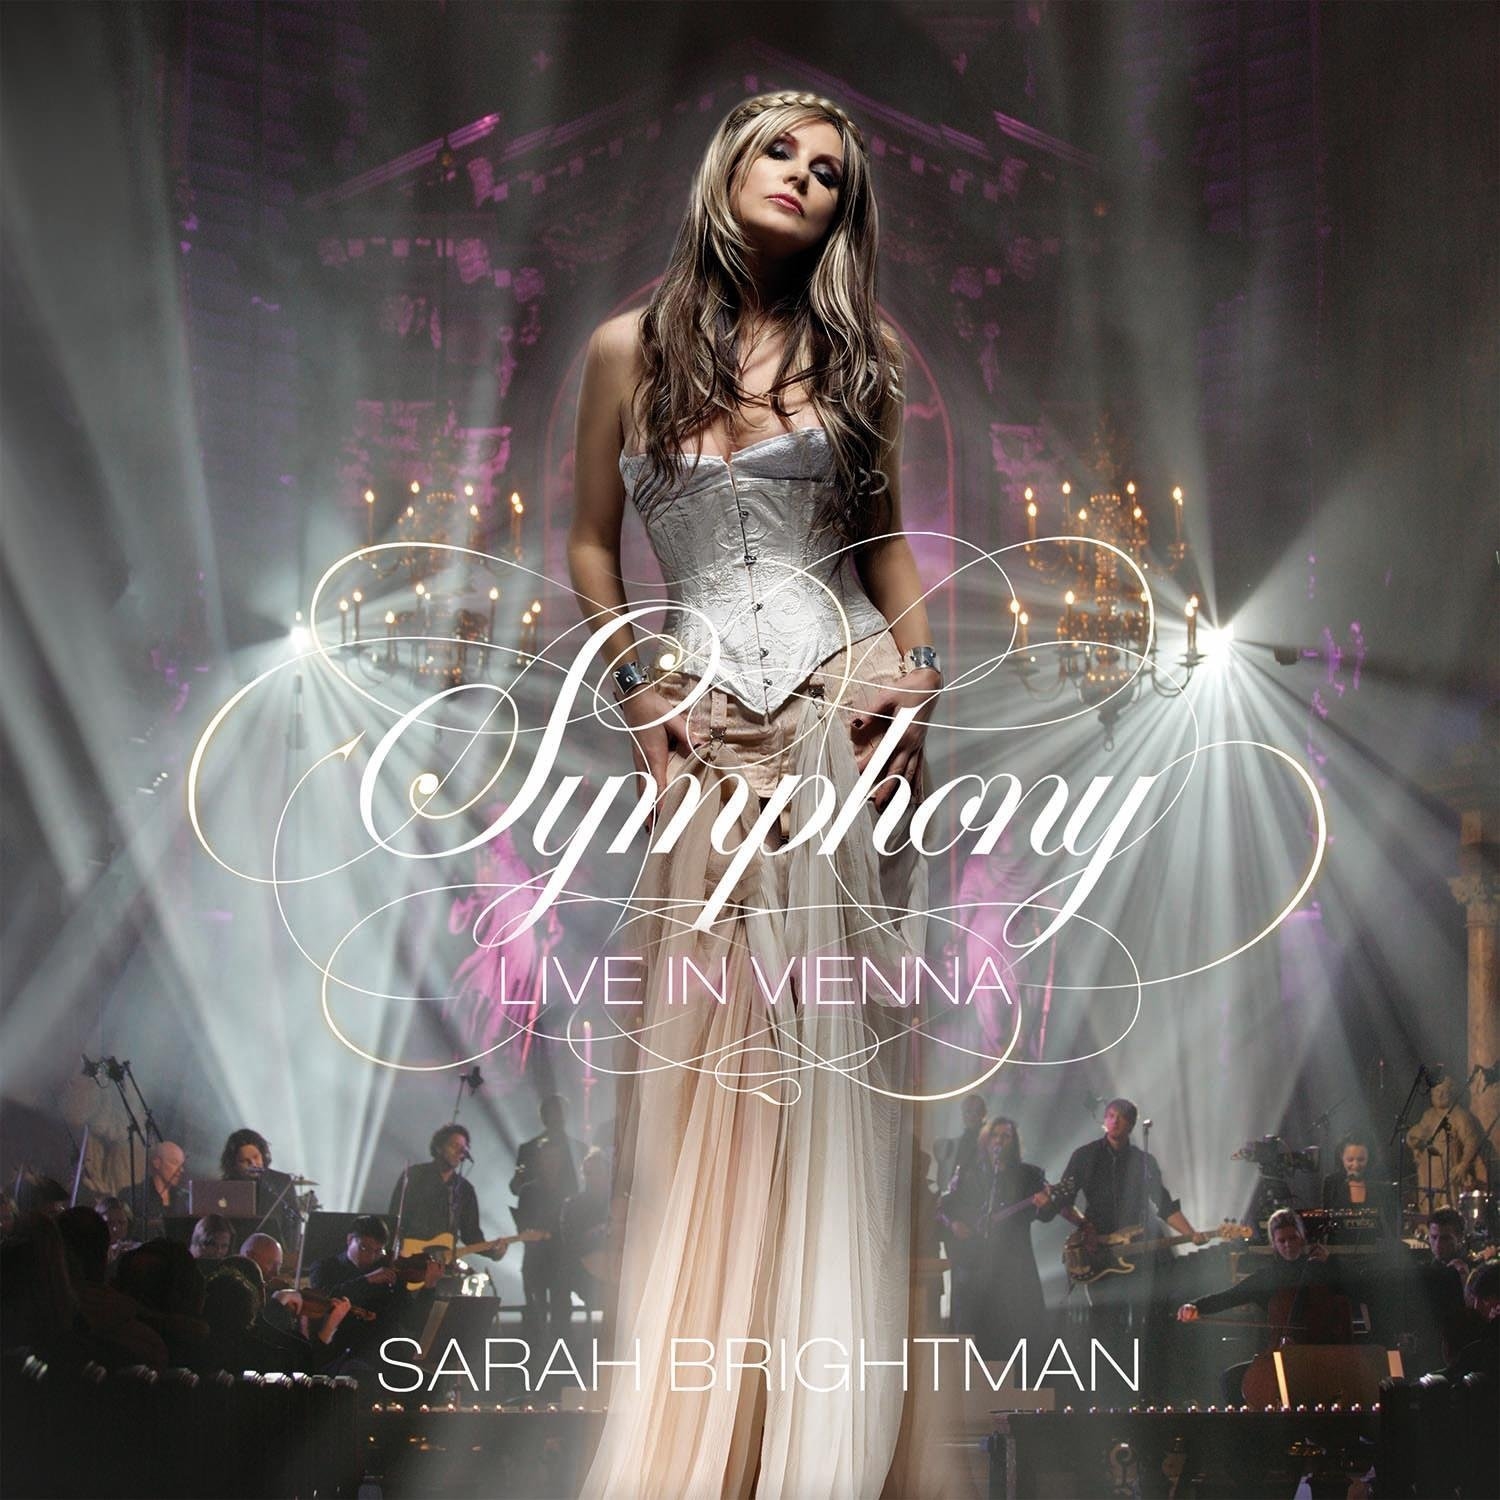 Sarah Brightman - Symphony (Live in Vienna)